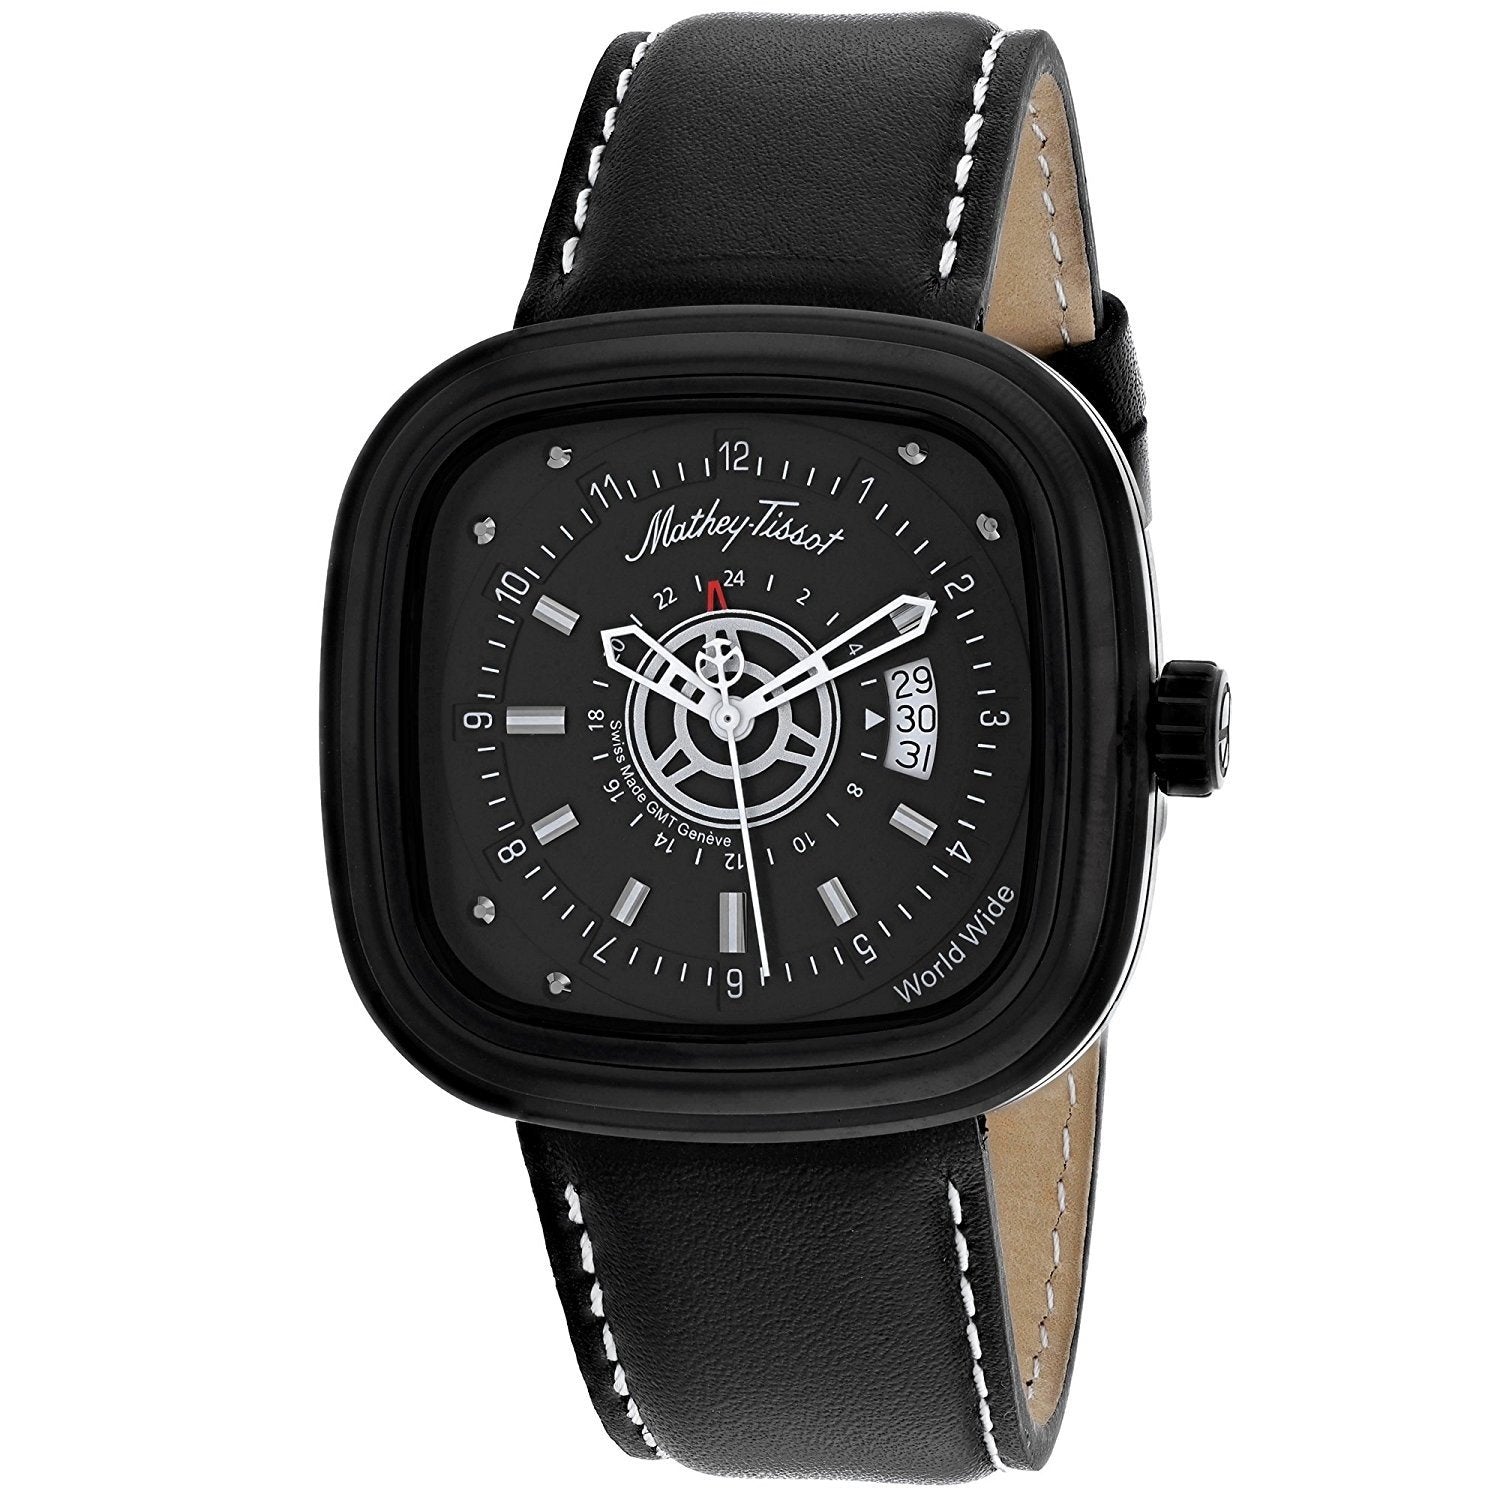 Mathey-Tissot Men's H110NN Classic Black Leather Watch - Bezali